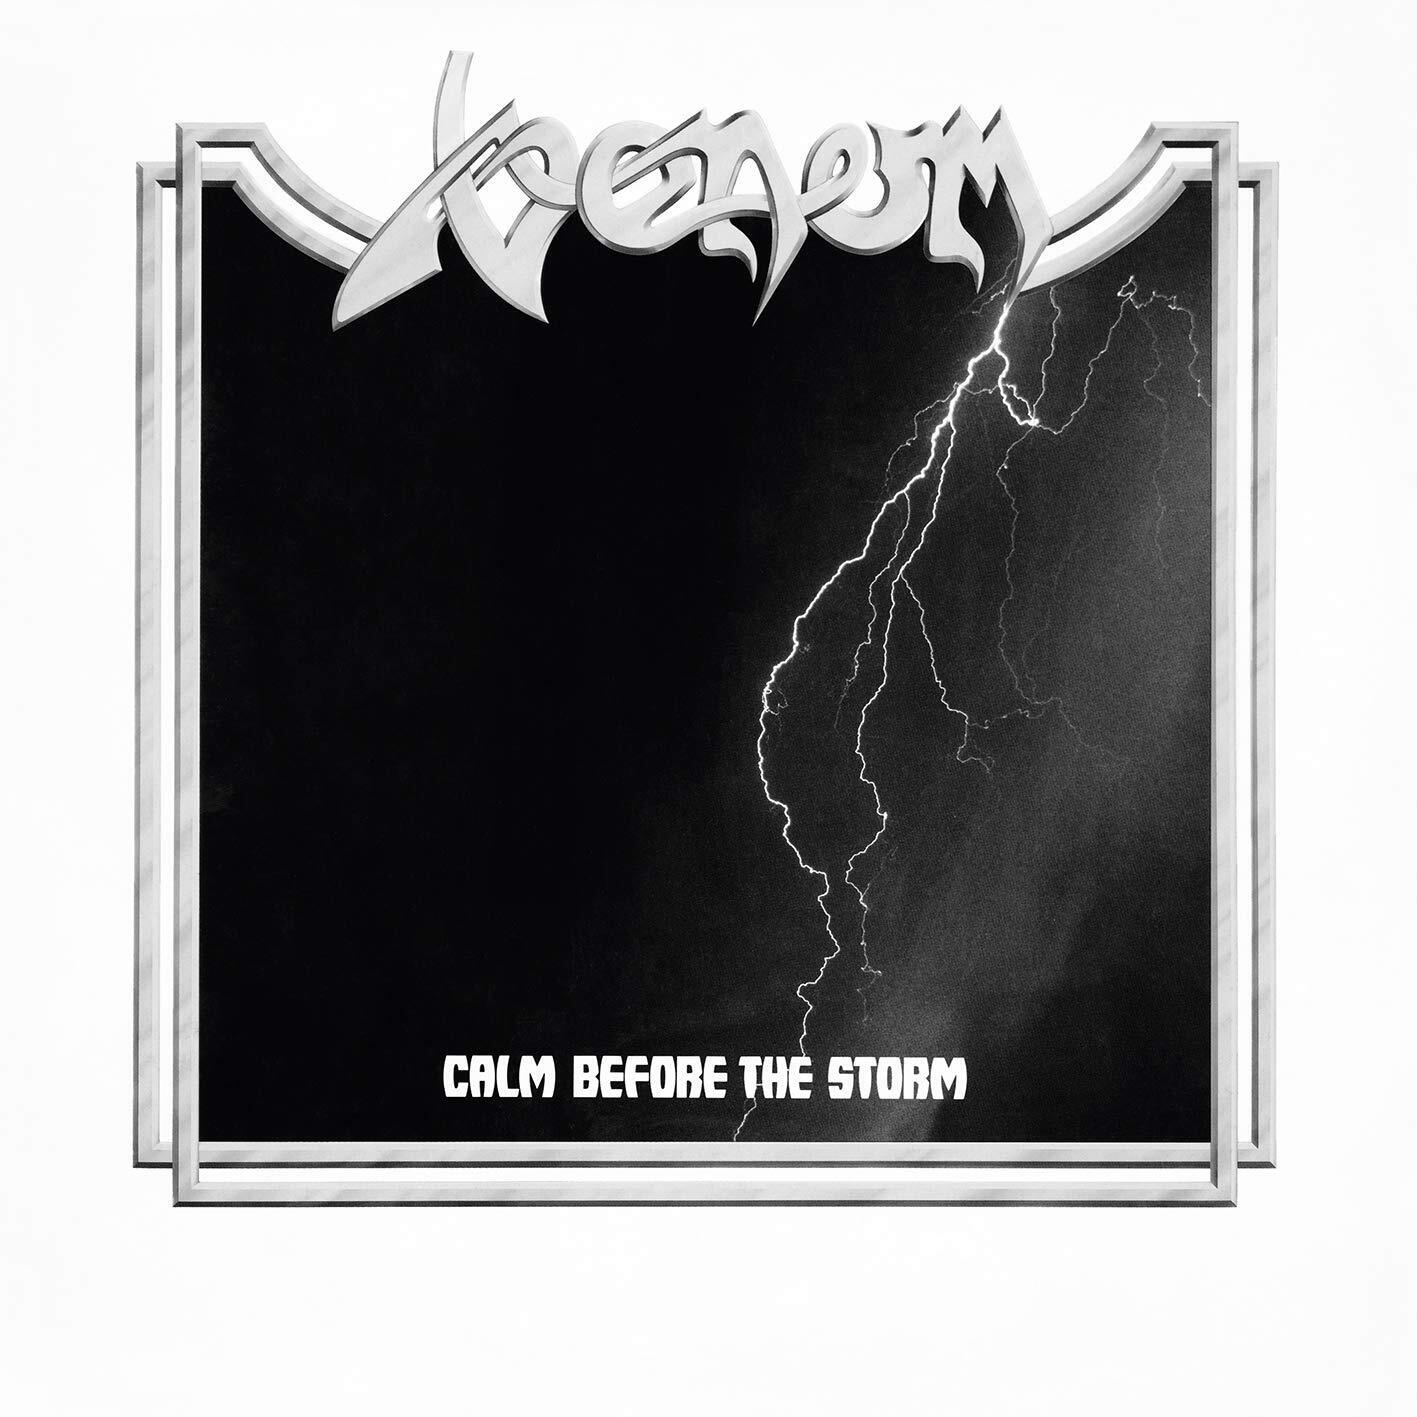 Venom – Calm Before The Storm LP